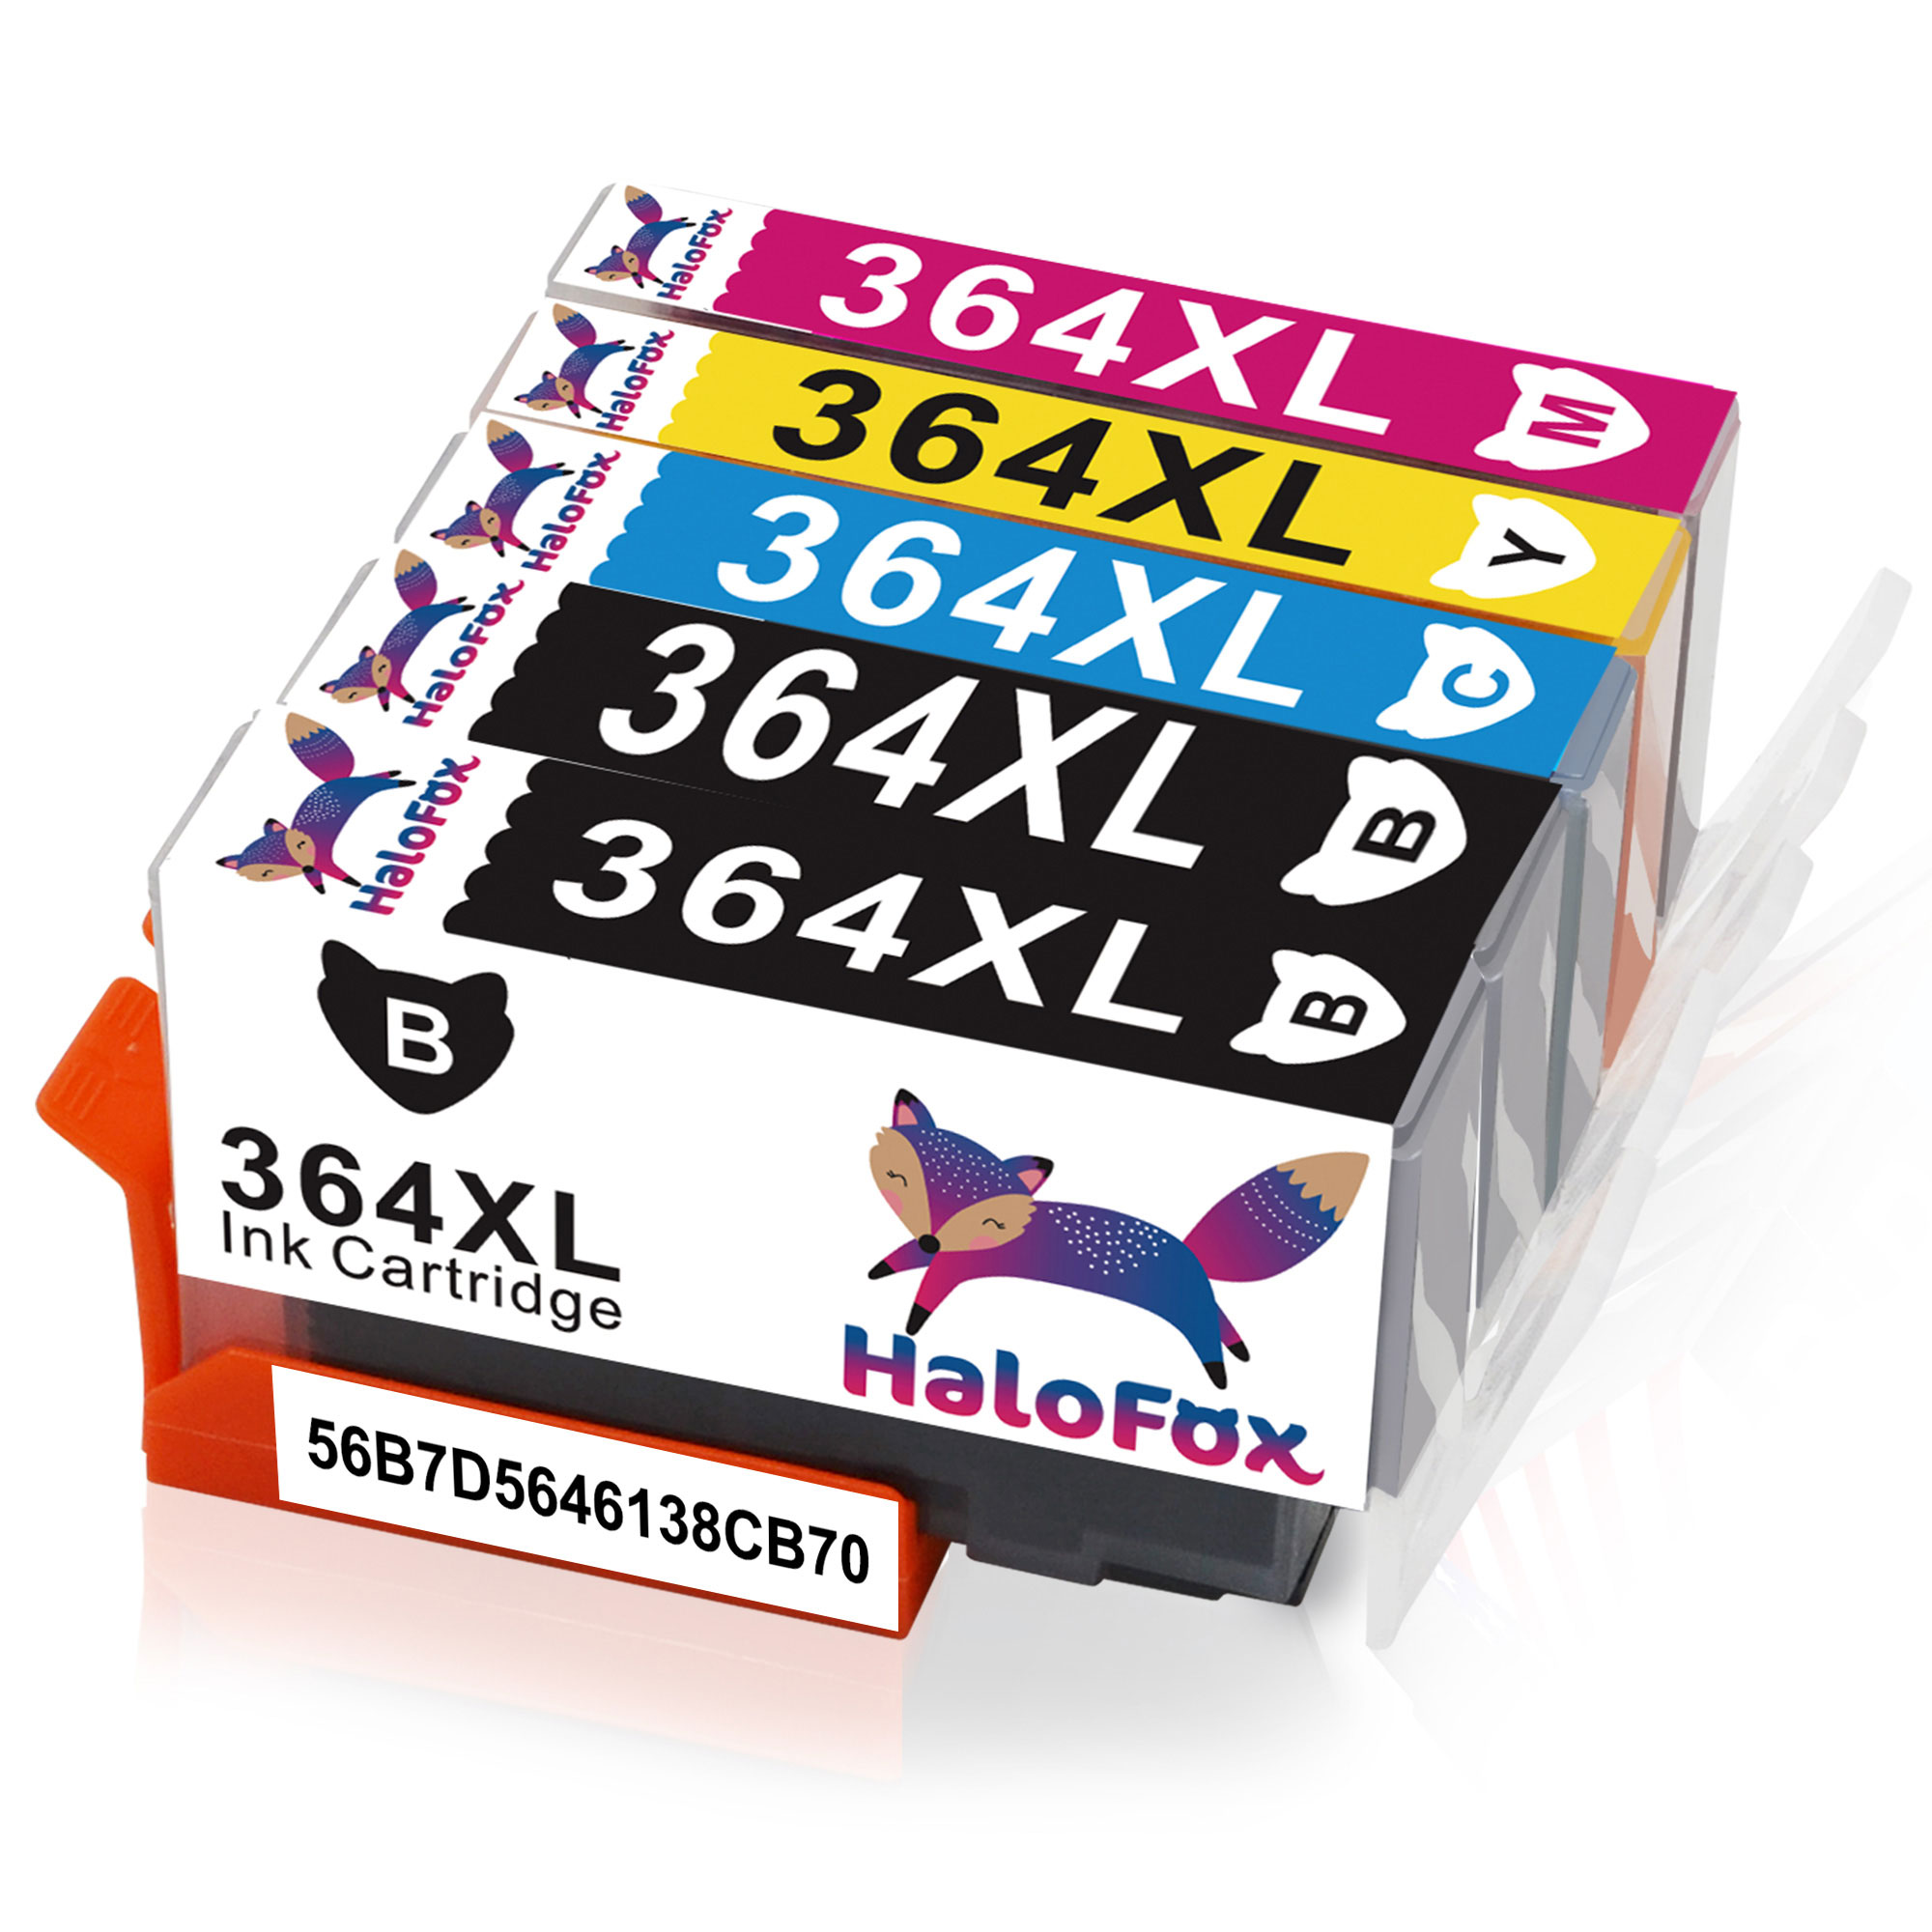 HaloFox 5 Ink Cartridges 364XL Combo Multipack 364 XL High Yield Compatible for HP DeskJet 3520 3070A OfficeJet 4620 Photosmart 5510 5514 5515 5520 5524 5525 6510 6520 7510 7520 e-All-in-One Printer Photosmart Plus B209a C5380 C6380